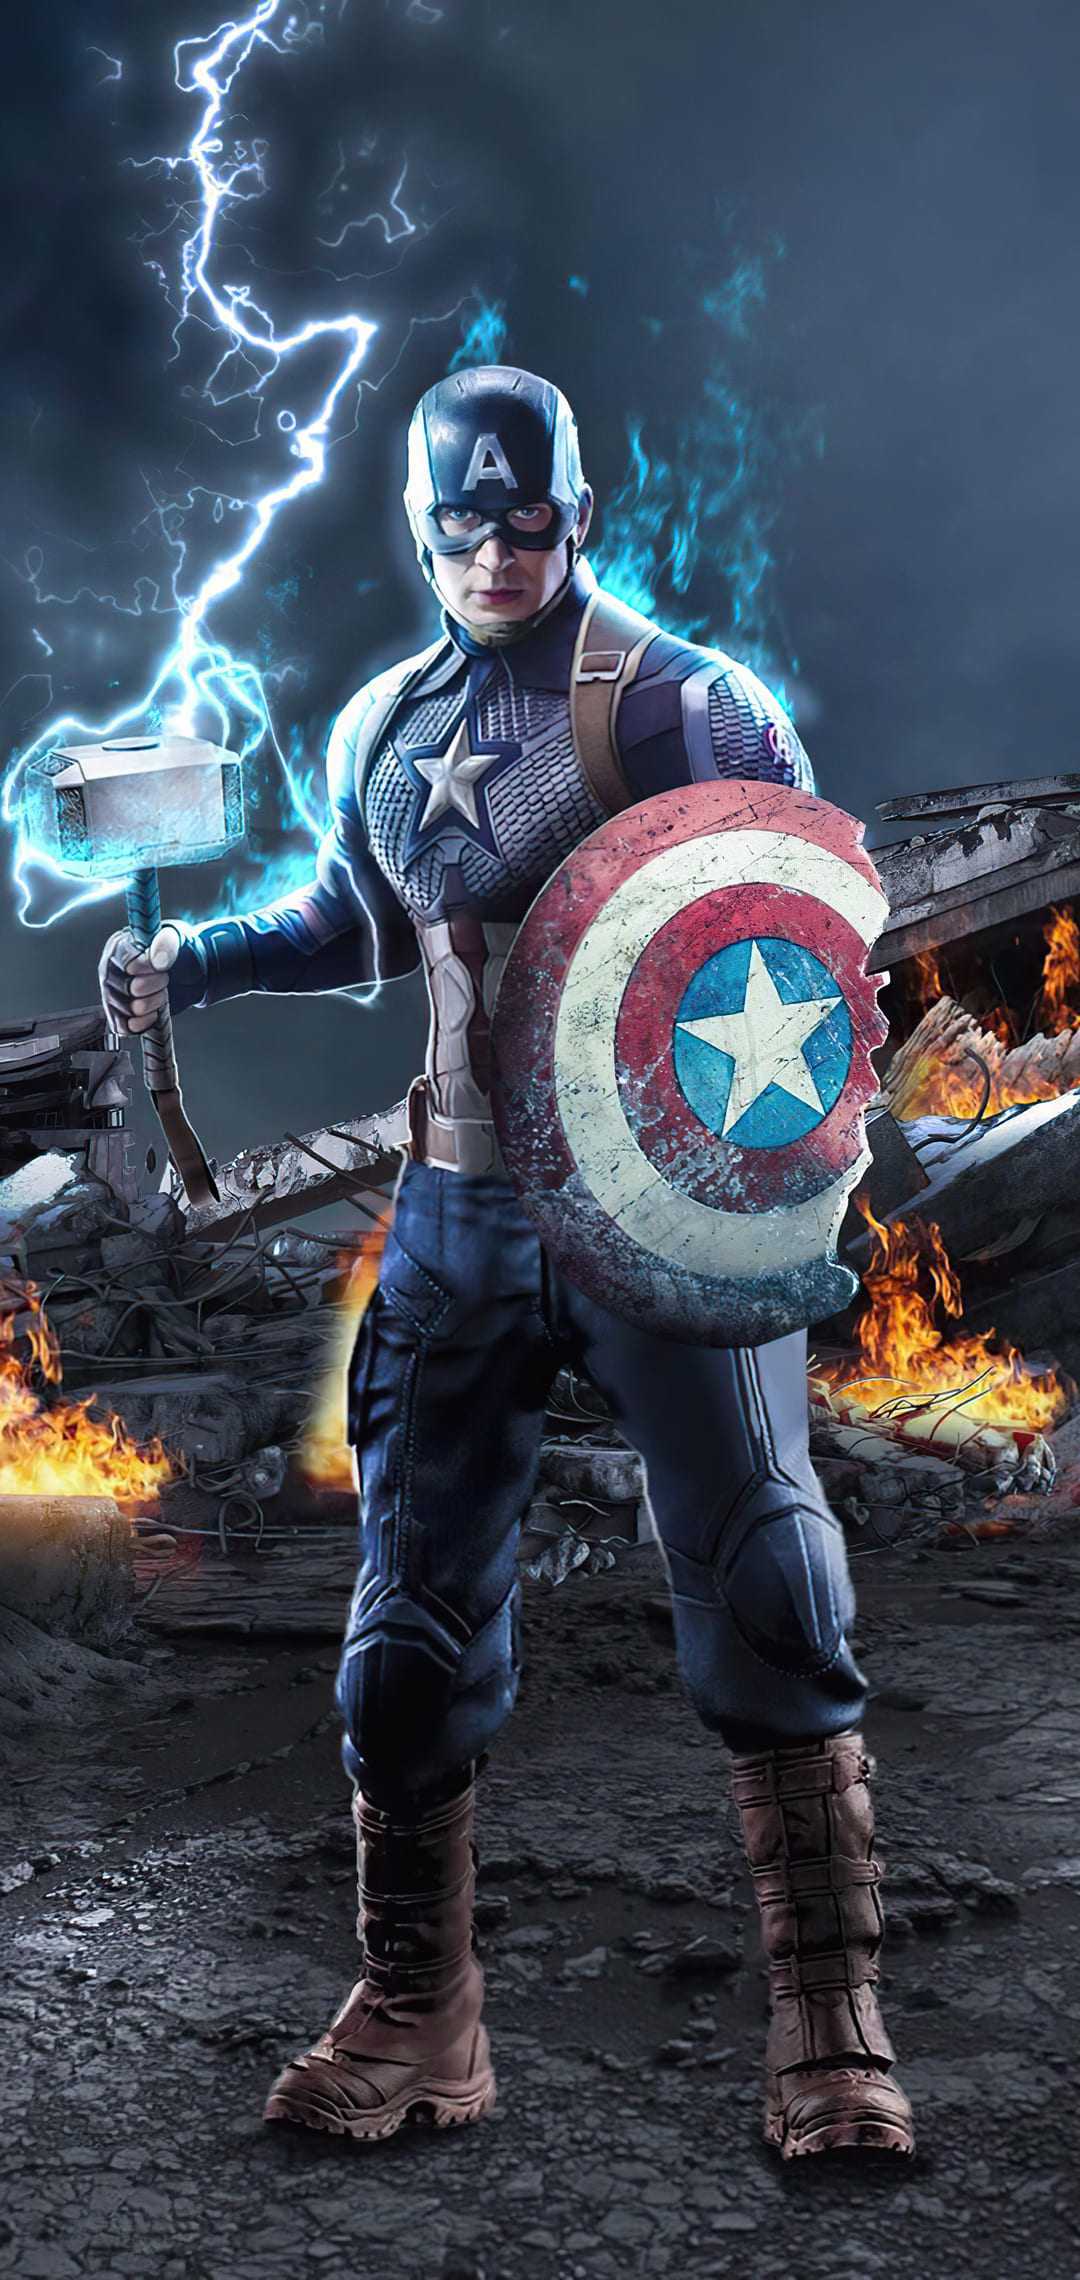 HD Phone Wallpapers on Twitter Captain America Shield usa movie hero  avengers httpstcojjt5W62xkS  Twitter